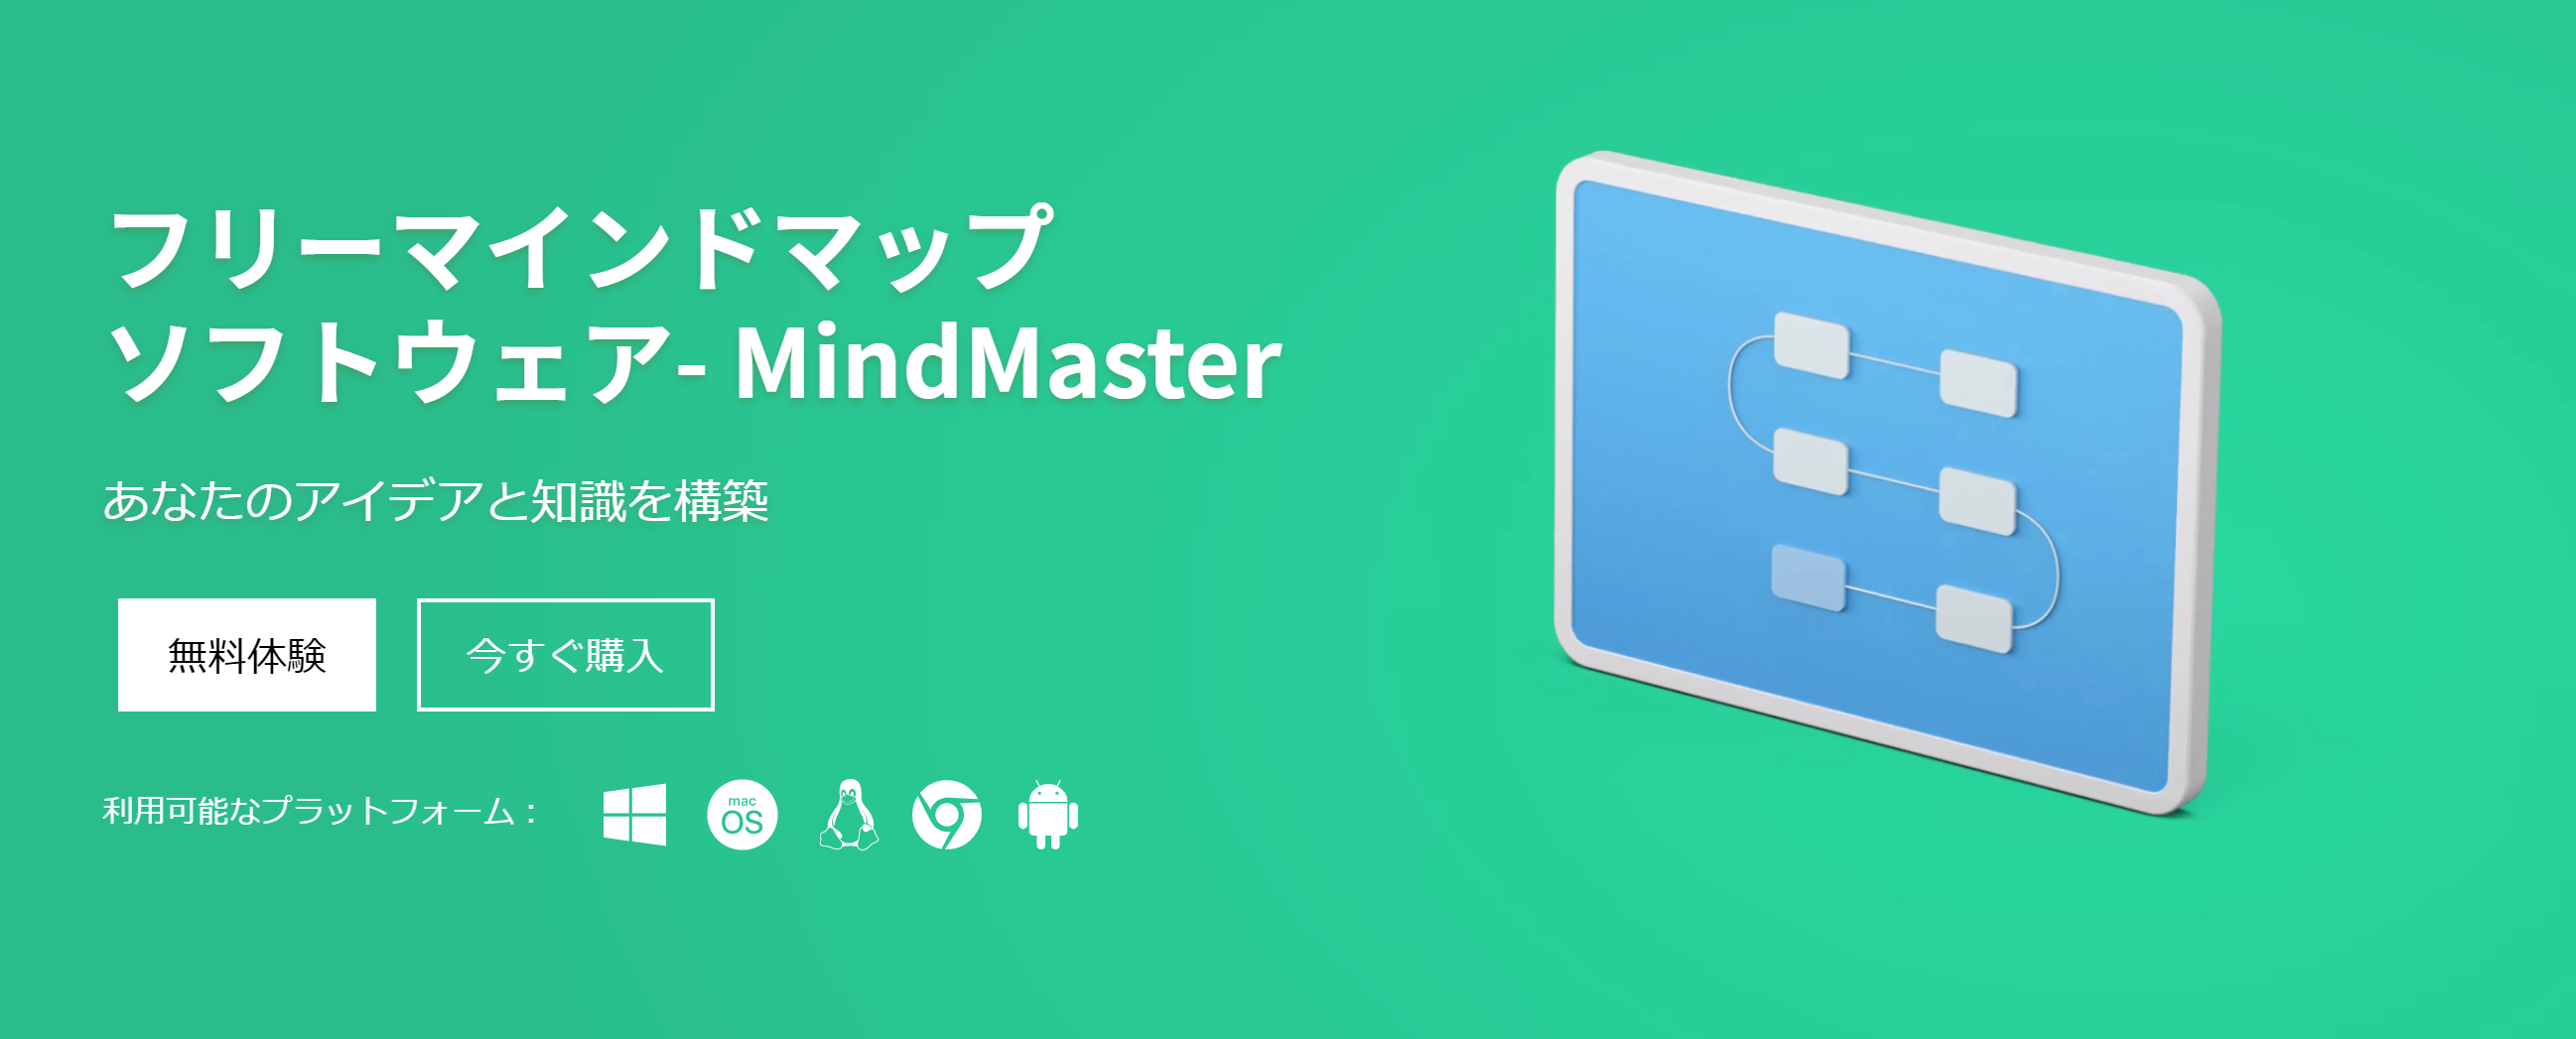 Mindmaster おすすめのマインドマップソフトと使い方 Hitodeblog